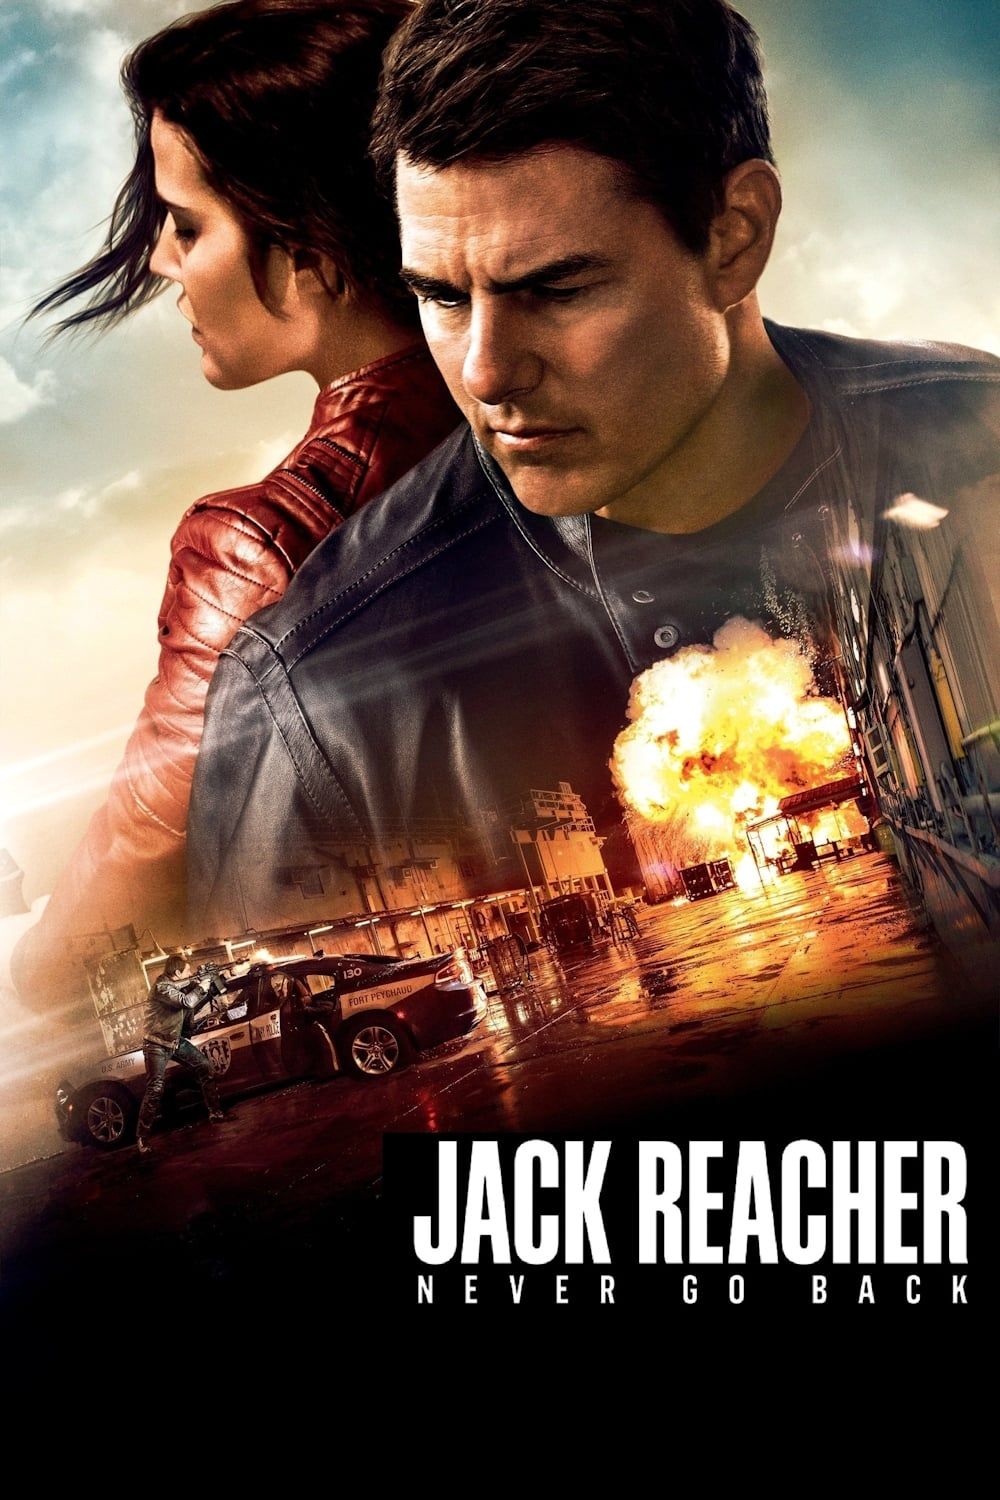 Watch: Jack Reacher 2 Full Trailer